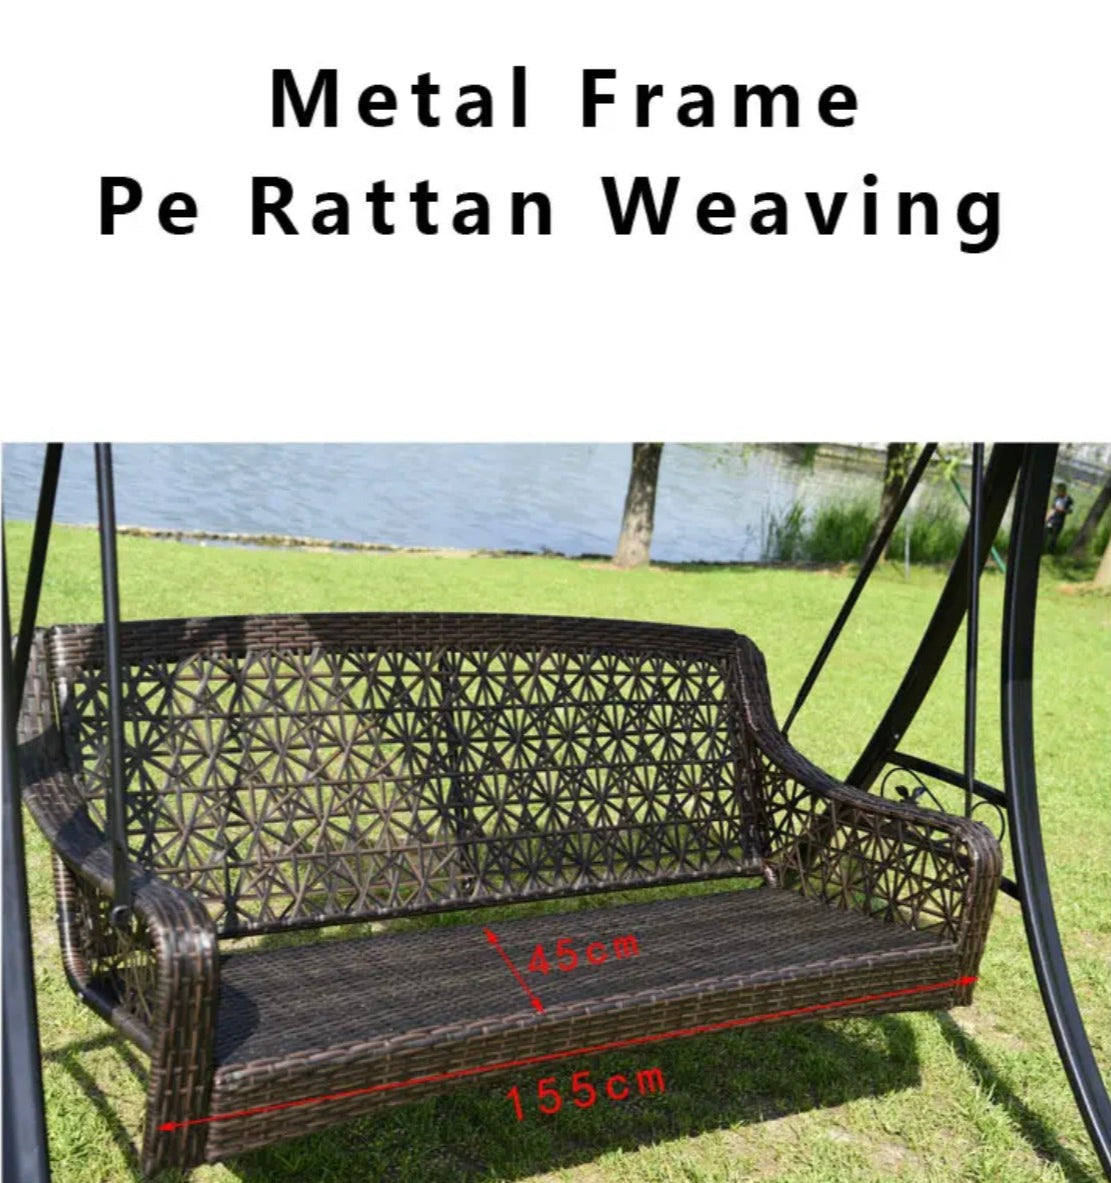 Outdoor Swing Chair Garden Patio Rocking Chair Designer Rattan Outdoor Furniture